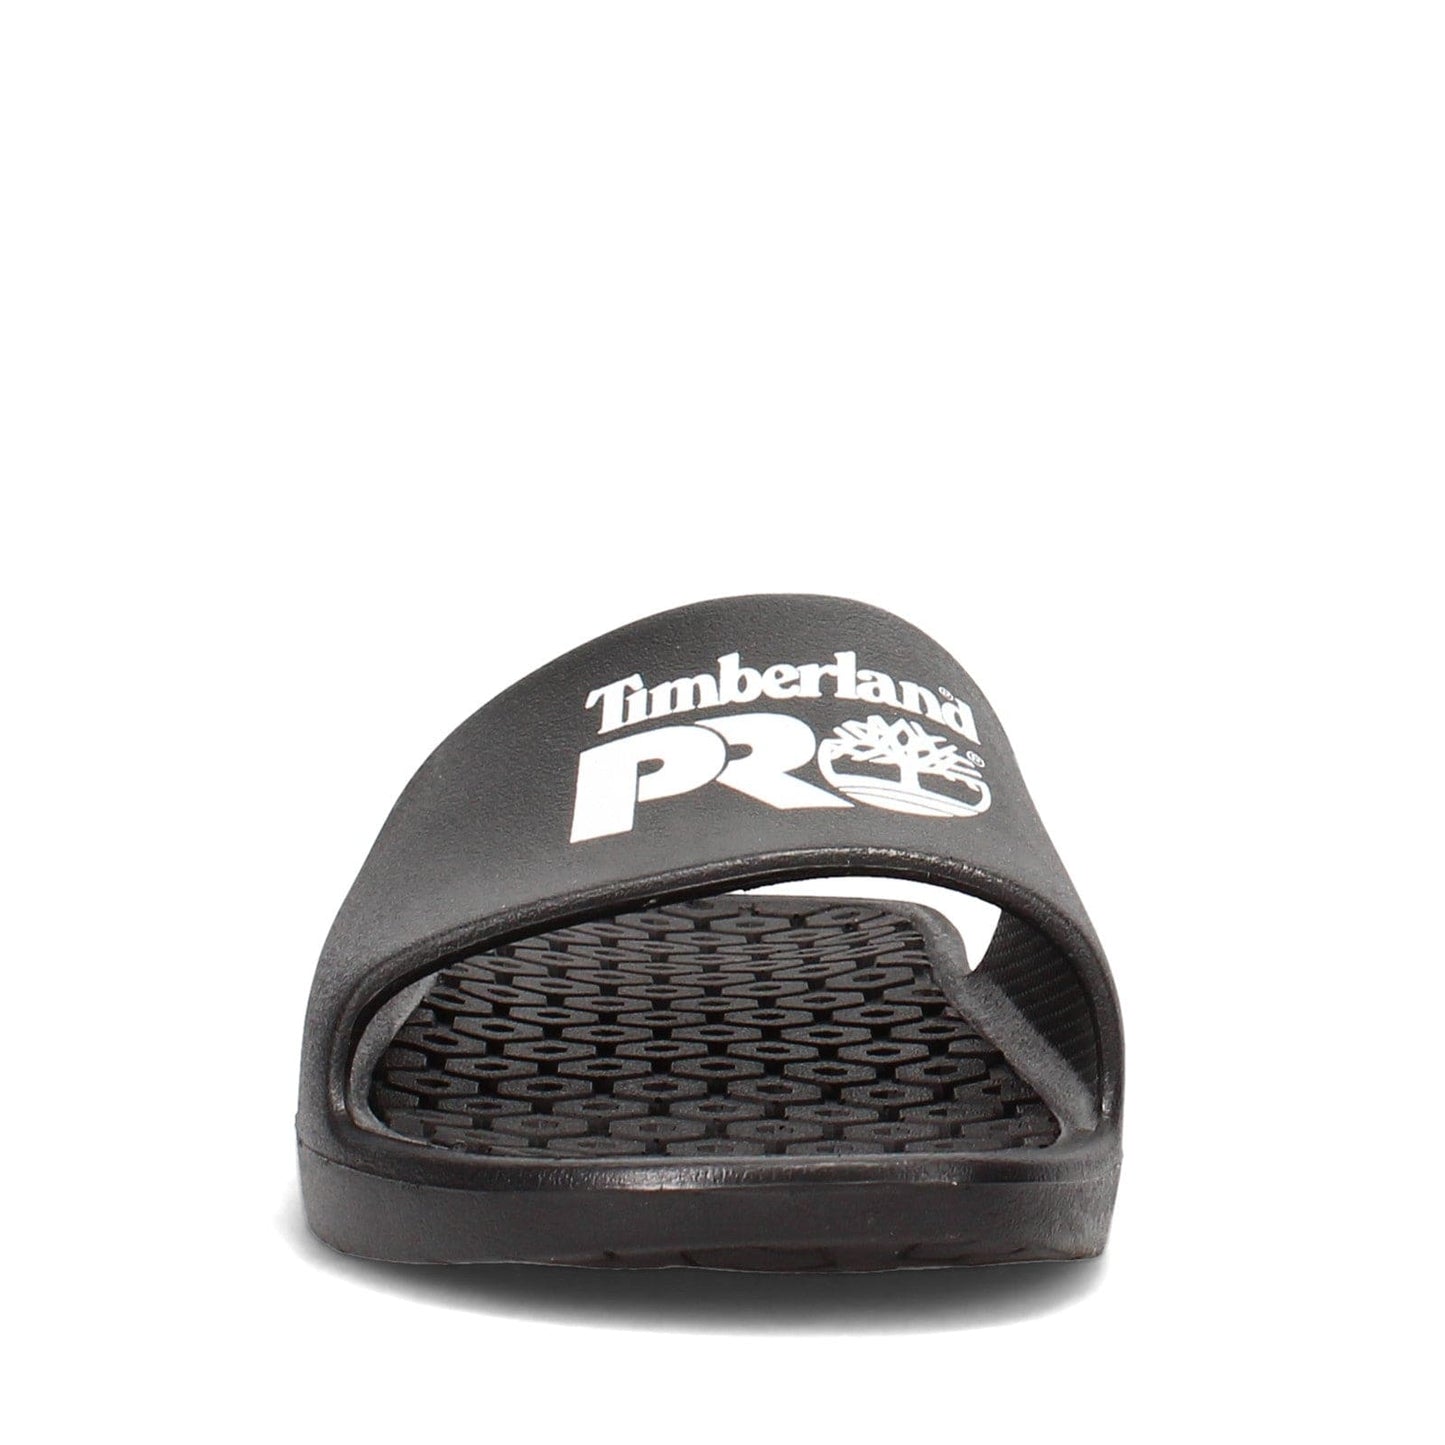 Timberland PRO Mens Size 8M Black White Slides Shower Shoes TB 0A2A7C 001 AFT